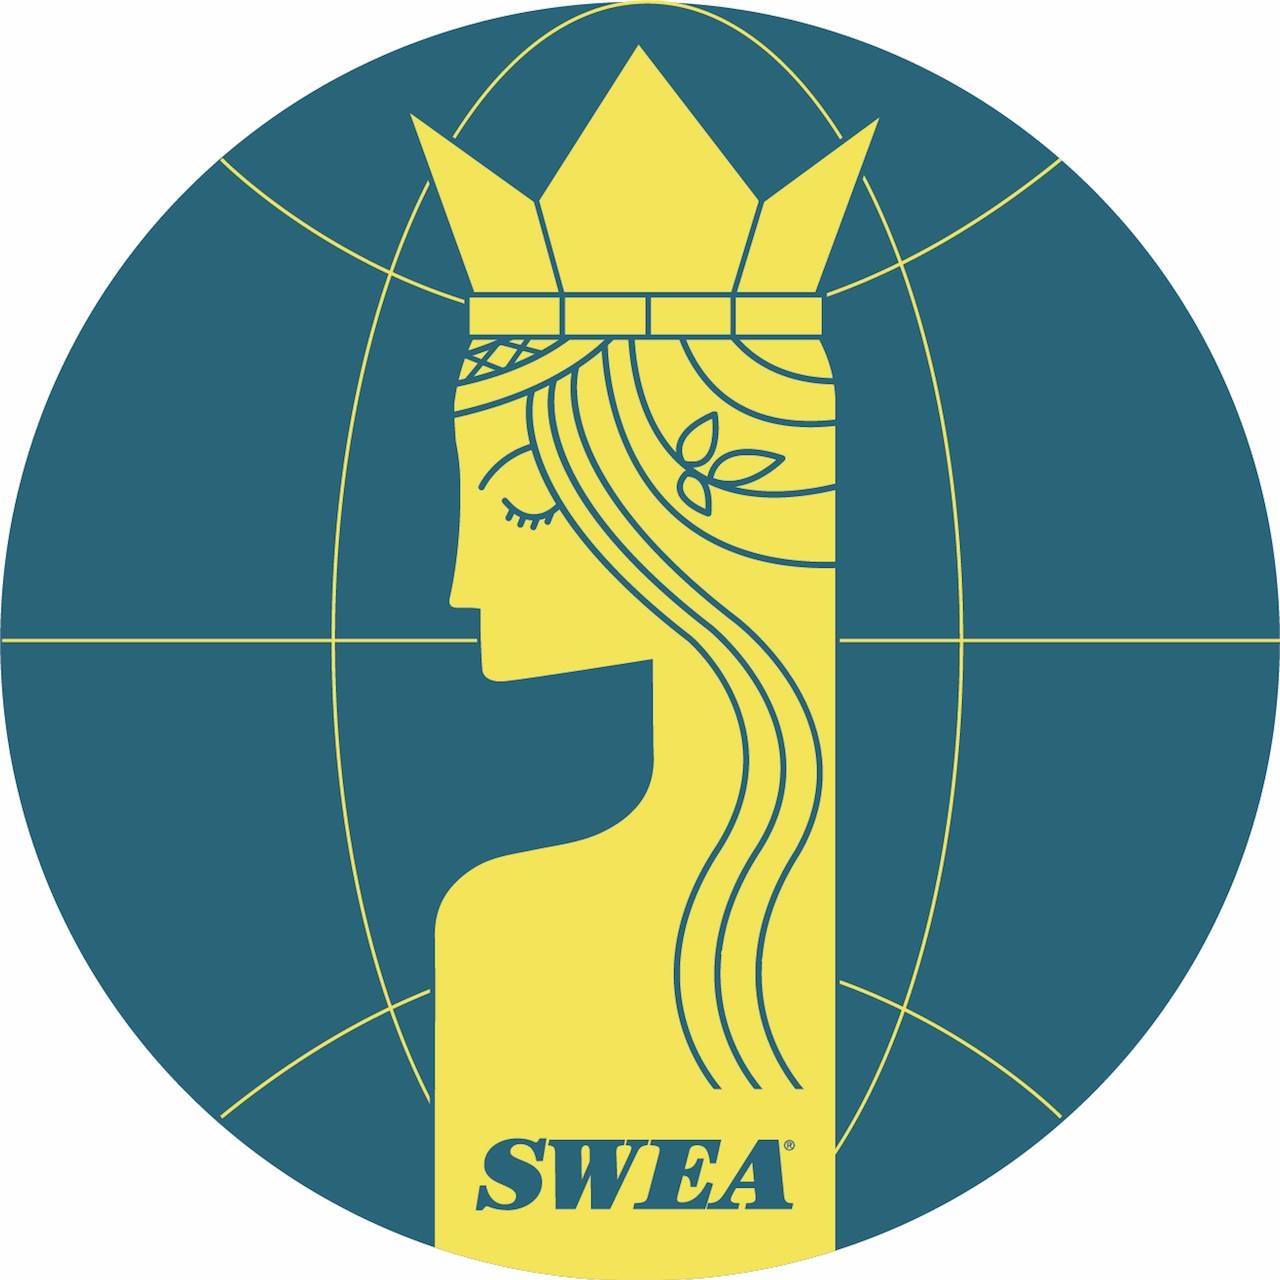 Swedish Speaking Organization in San Jose California - Swedish Women’s Educational Association Orange County